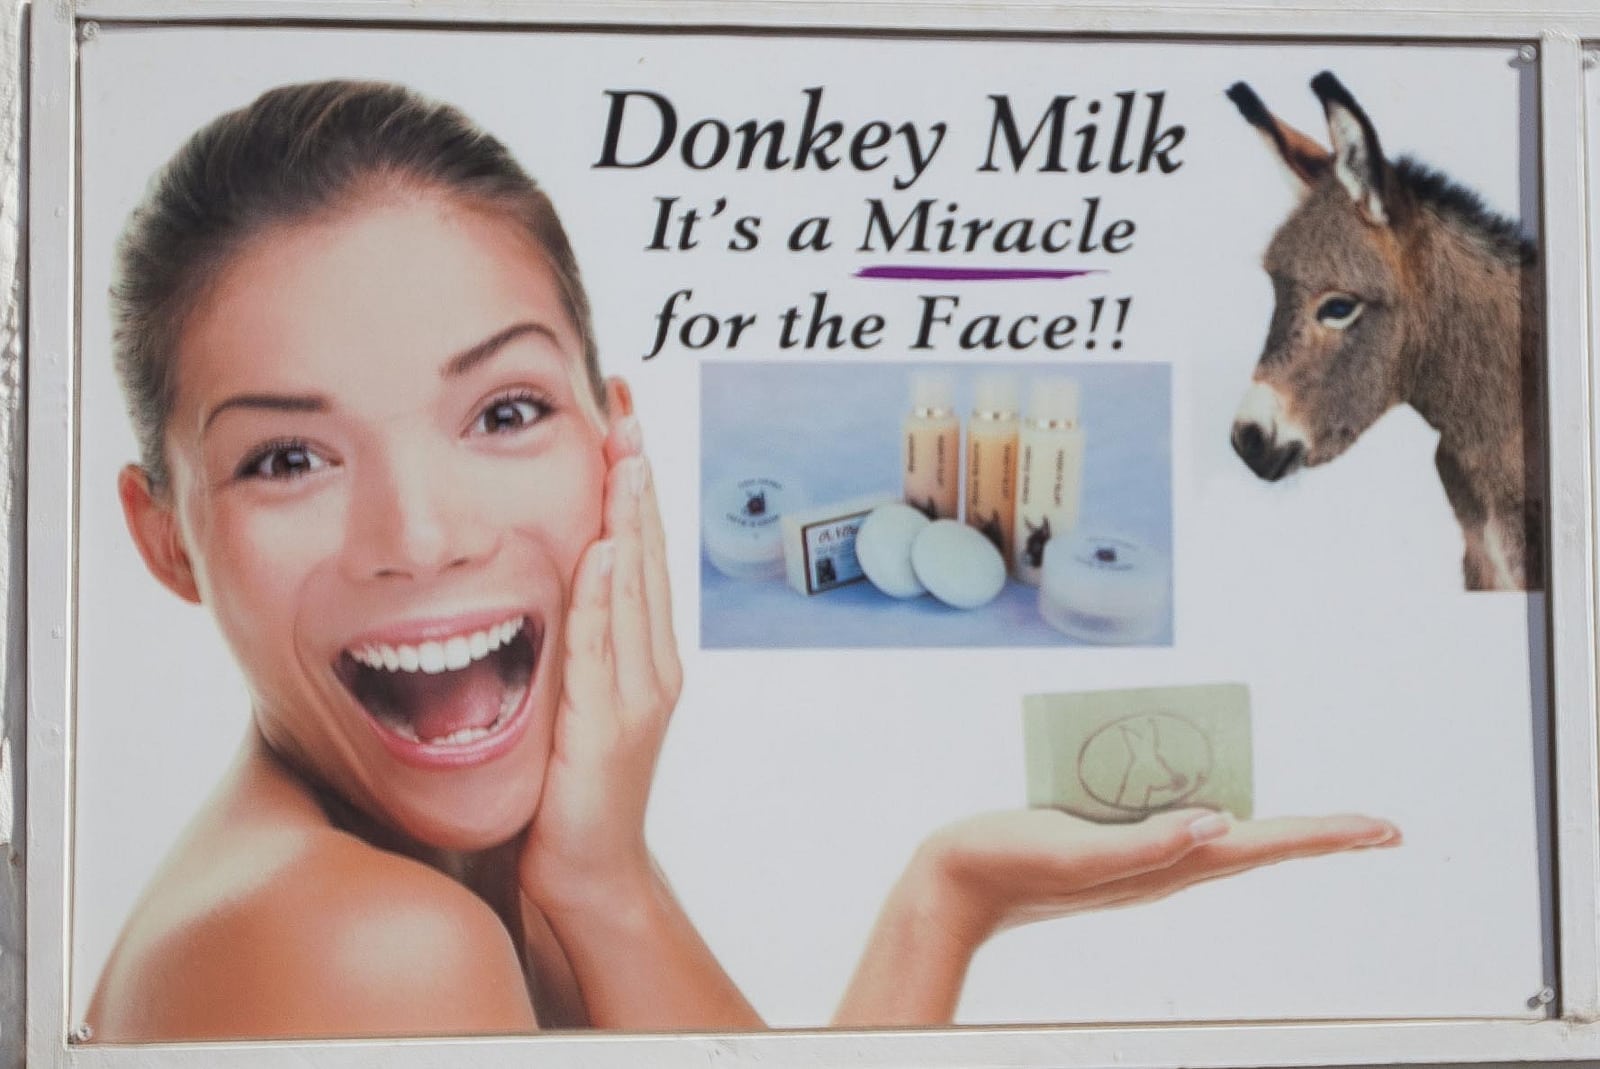 Donkey milk advert